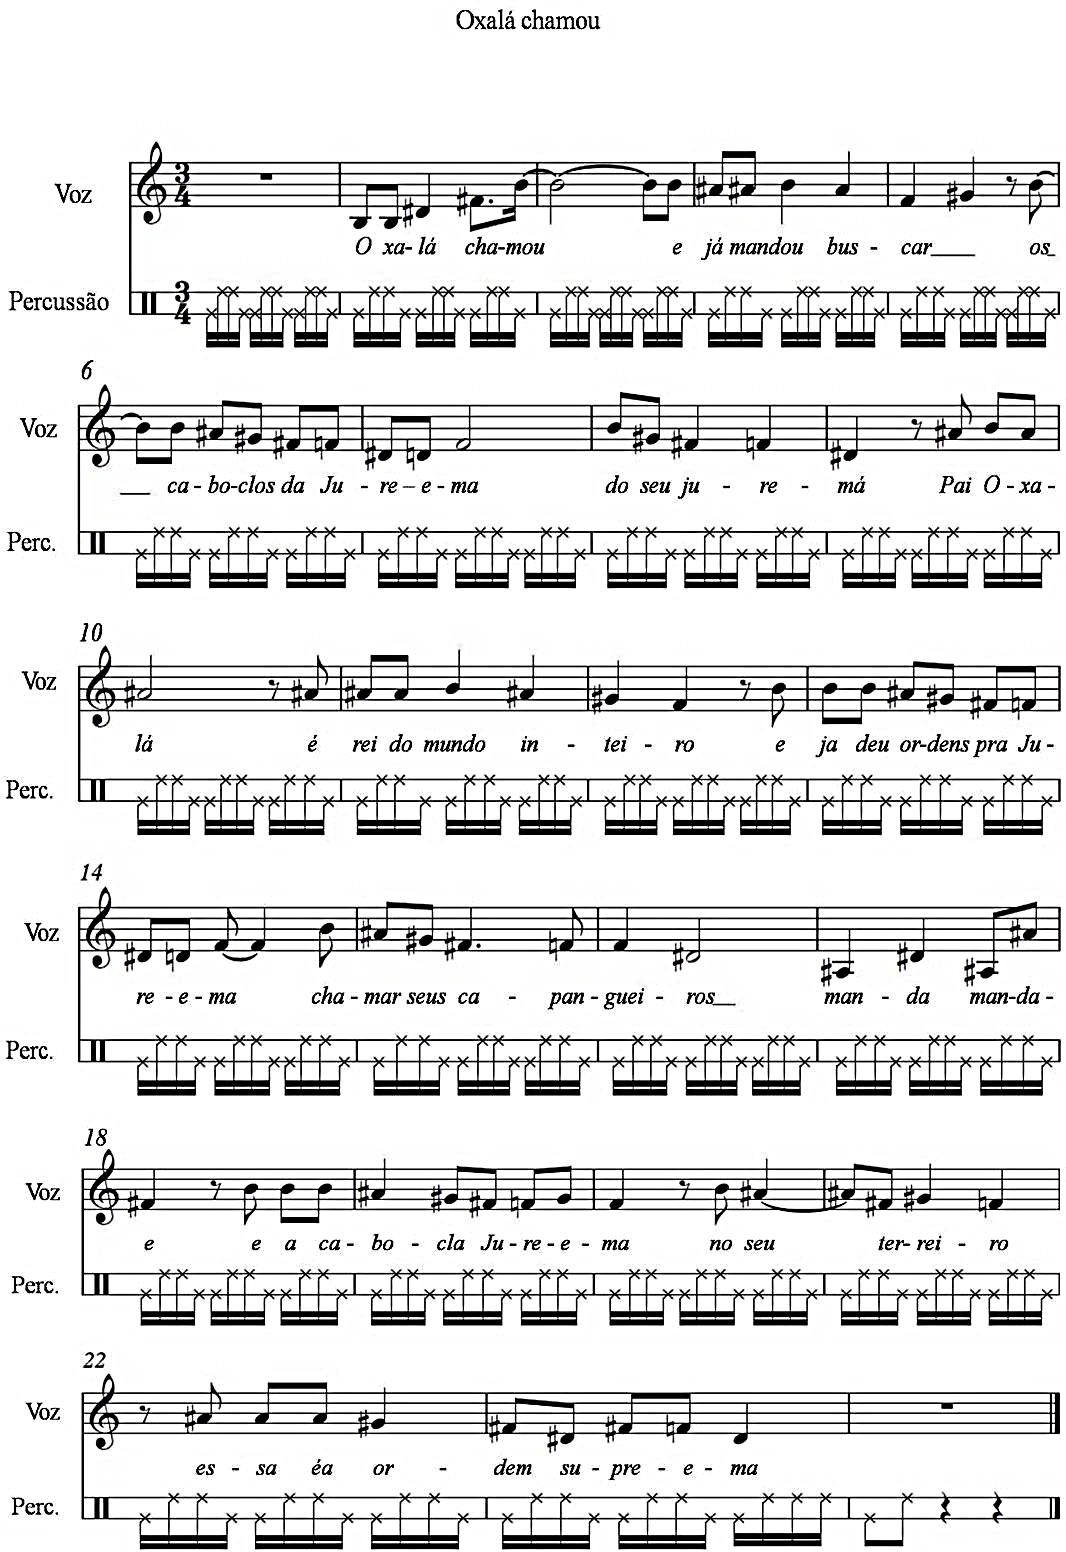 Music sheet 5. Incorporation ponto: Oxala chamou